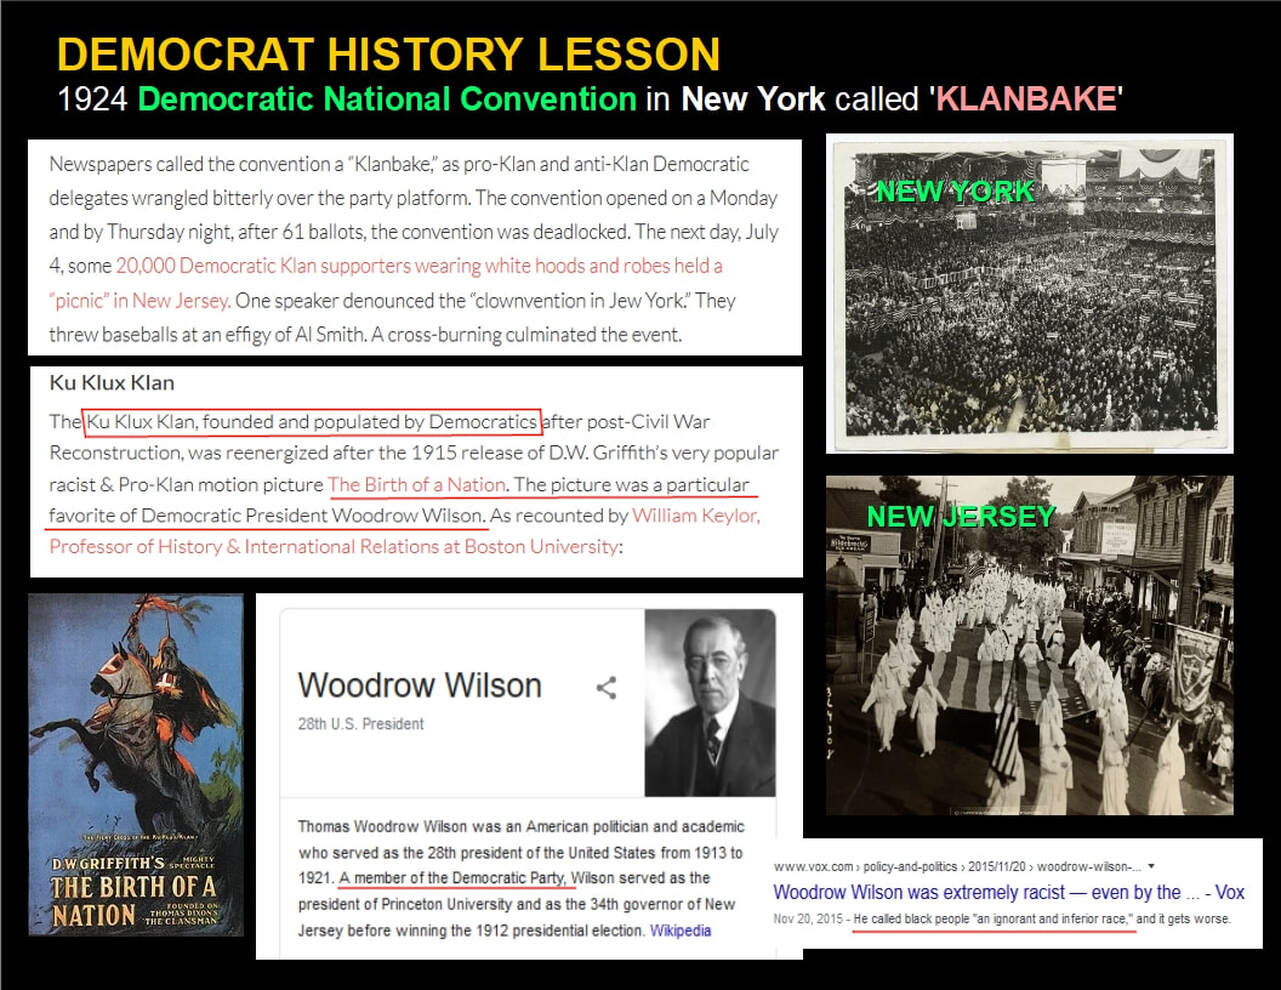 Democrats started the Ku Klux Klan